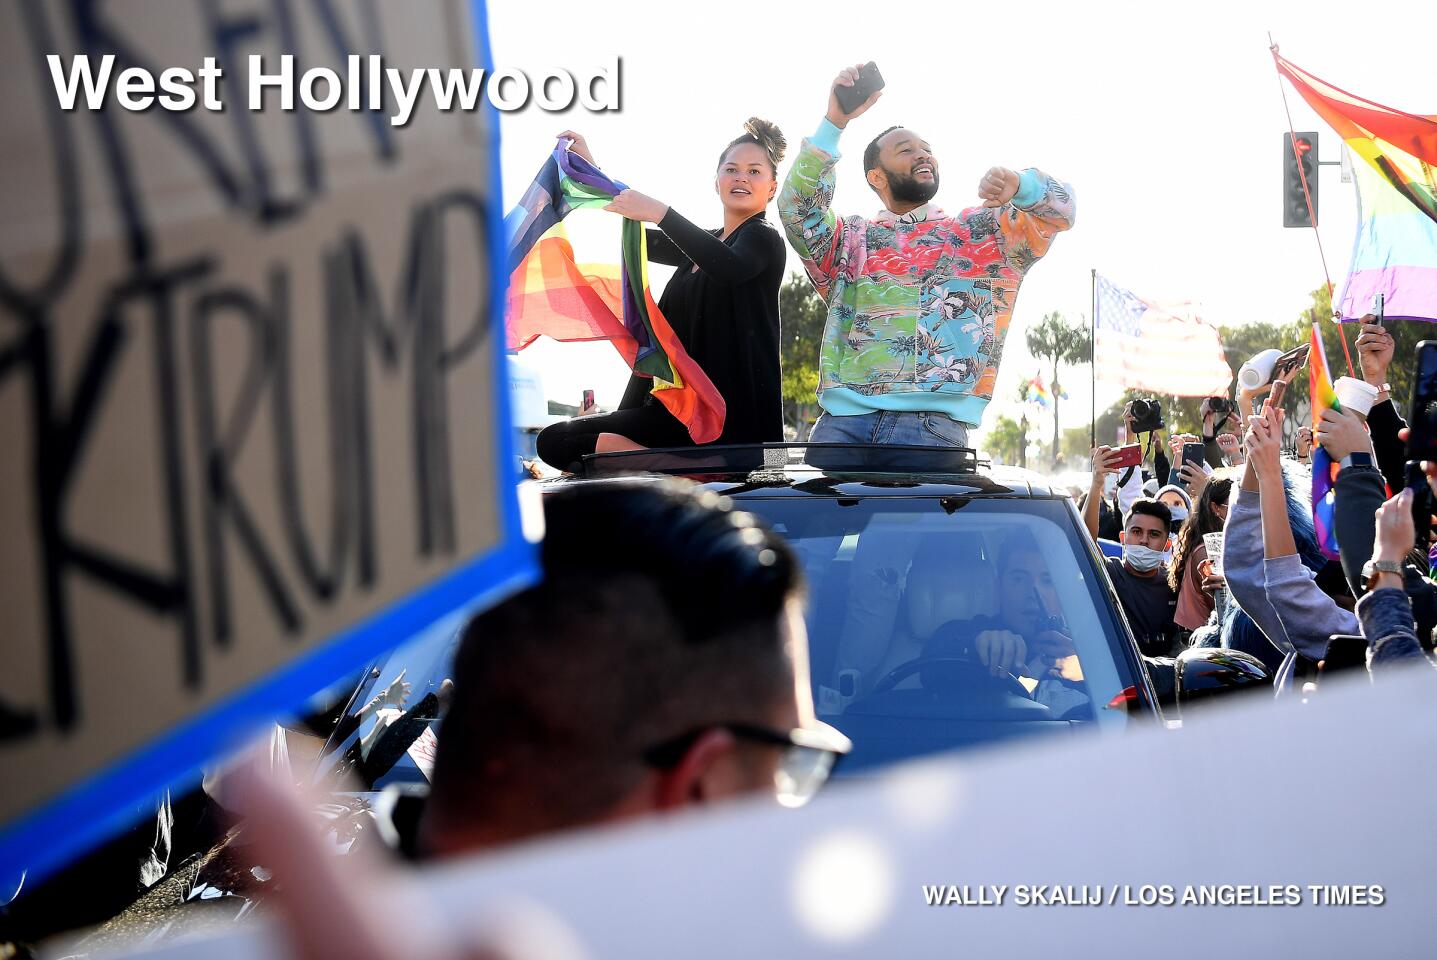 Singer John Legend and is wife Chrissy Teigen celebrate along Santa Monica Blvd. in West Hollywood.